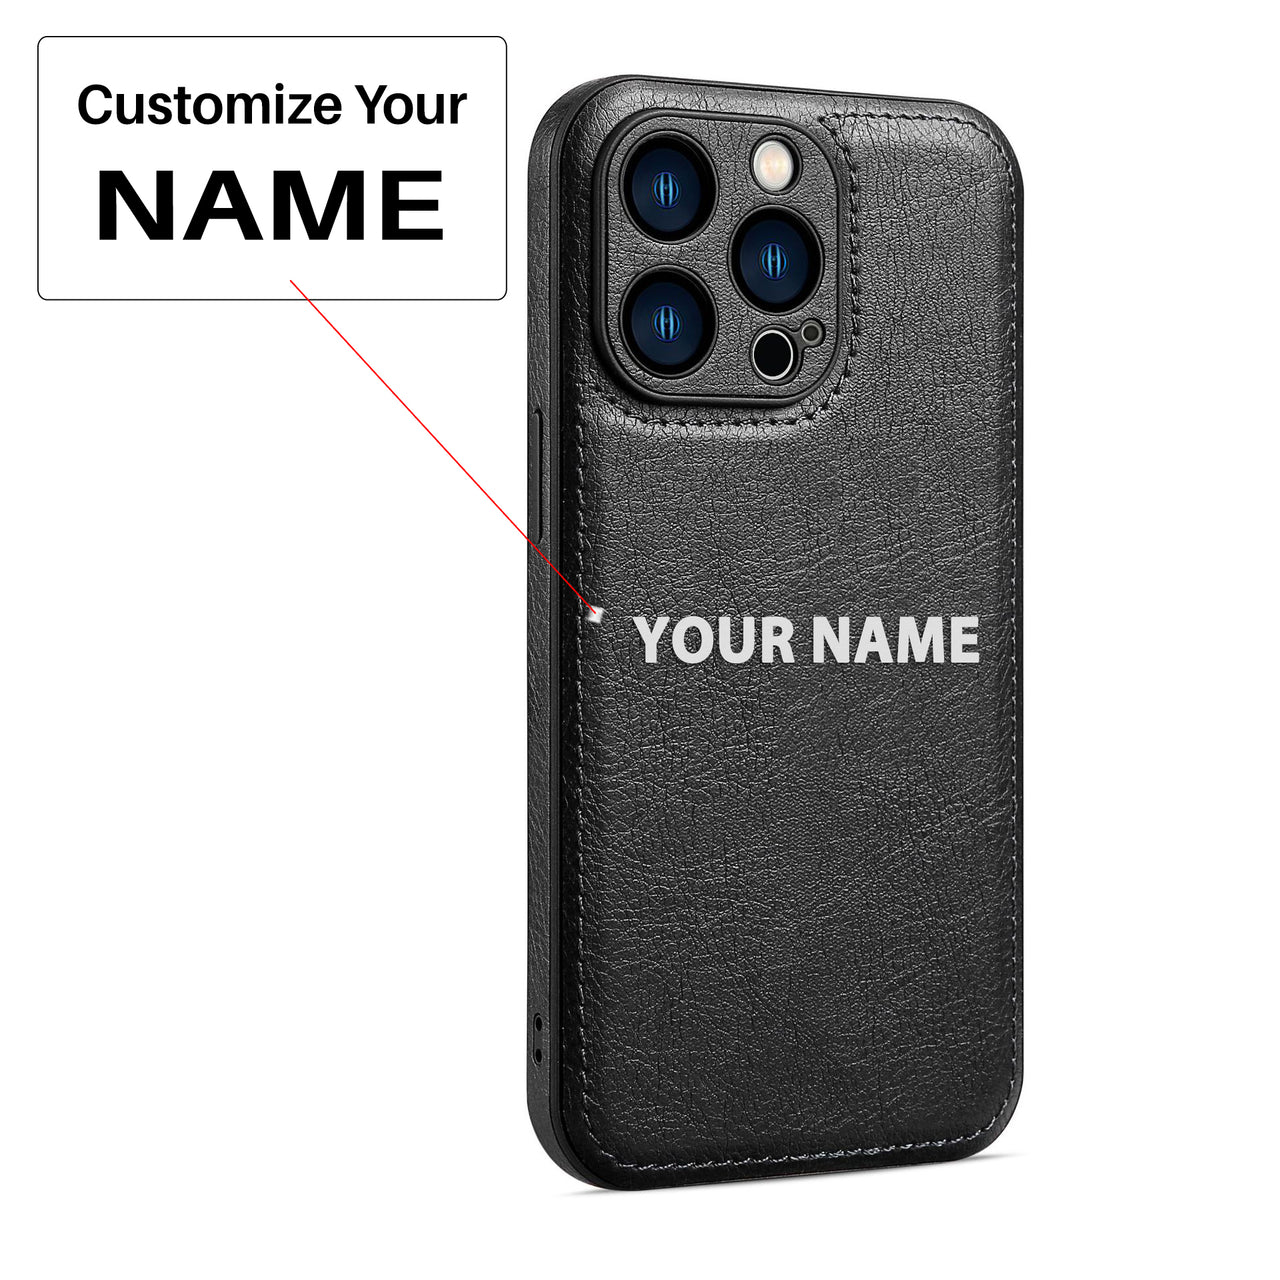 Custom Name Designed Leather iPhone Cases